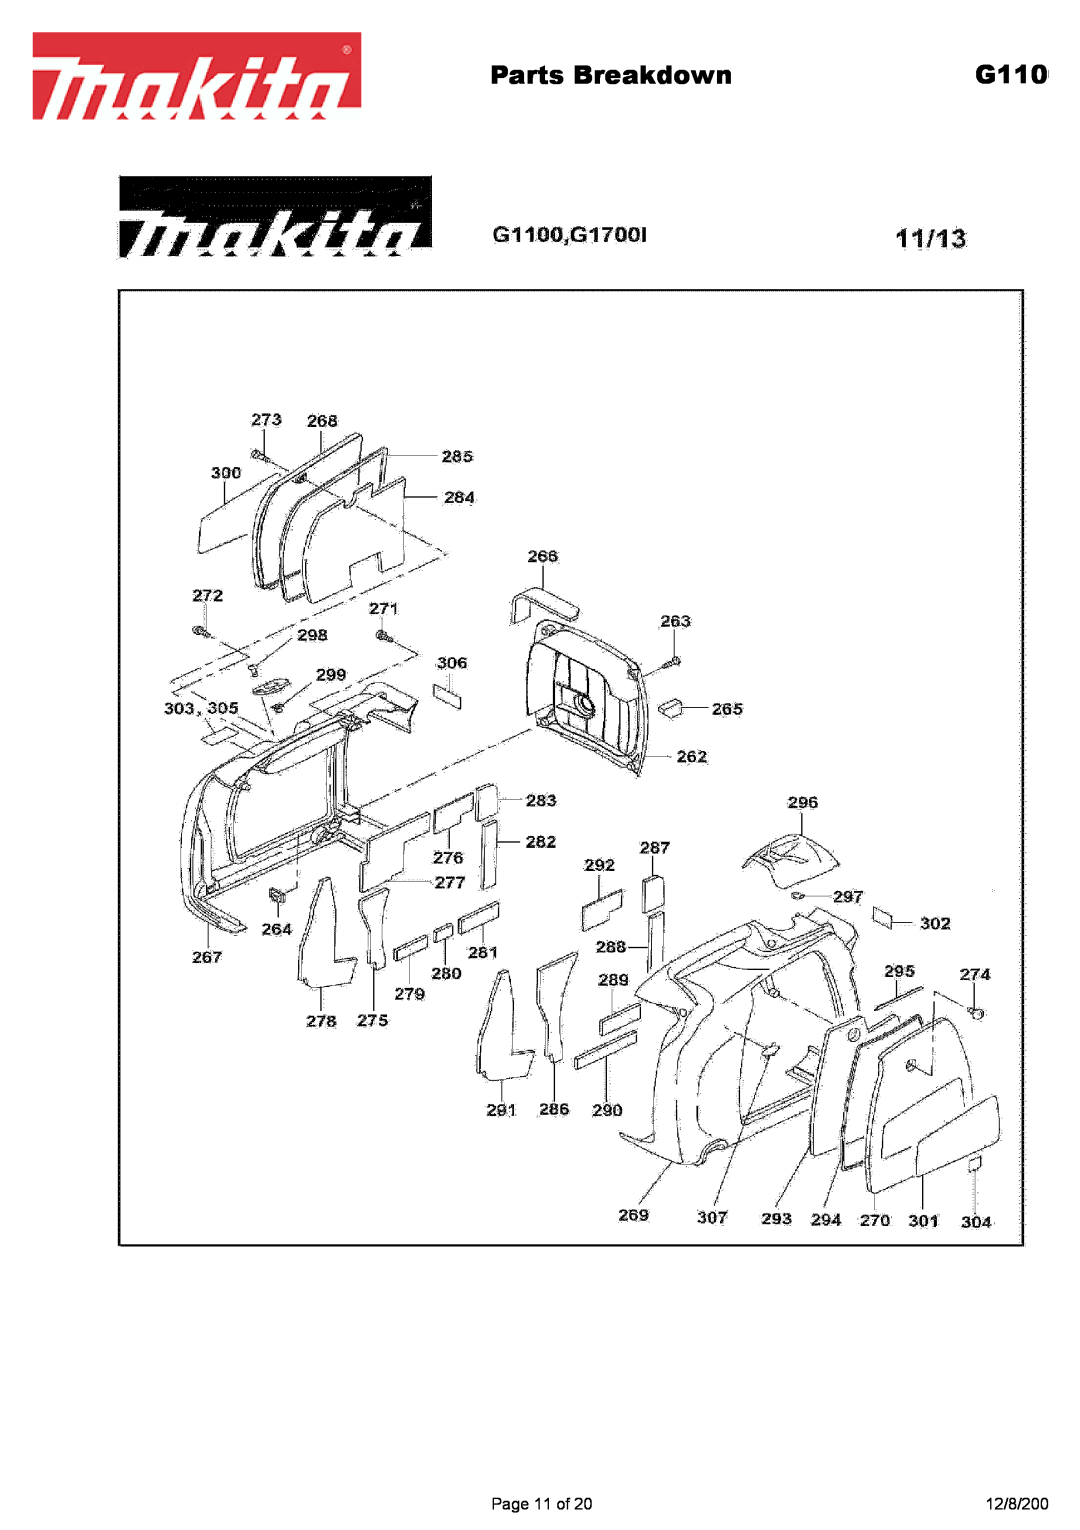 Makita G1700i manual Parts Breakdown, G110, Page 11 of, 12/8/200 